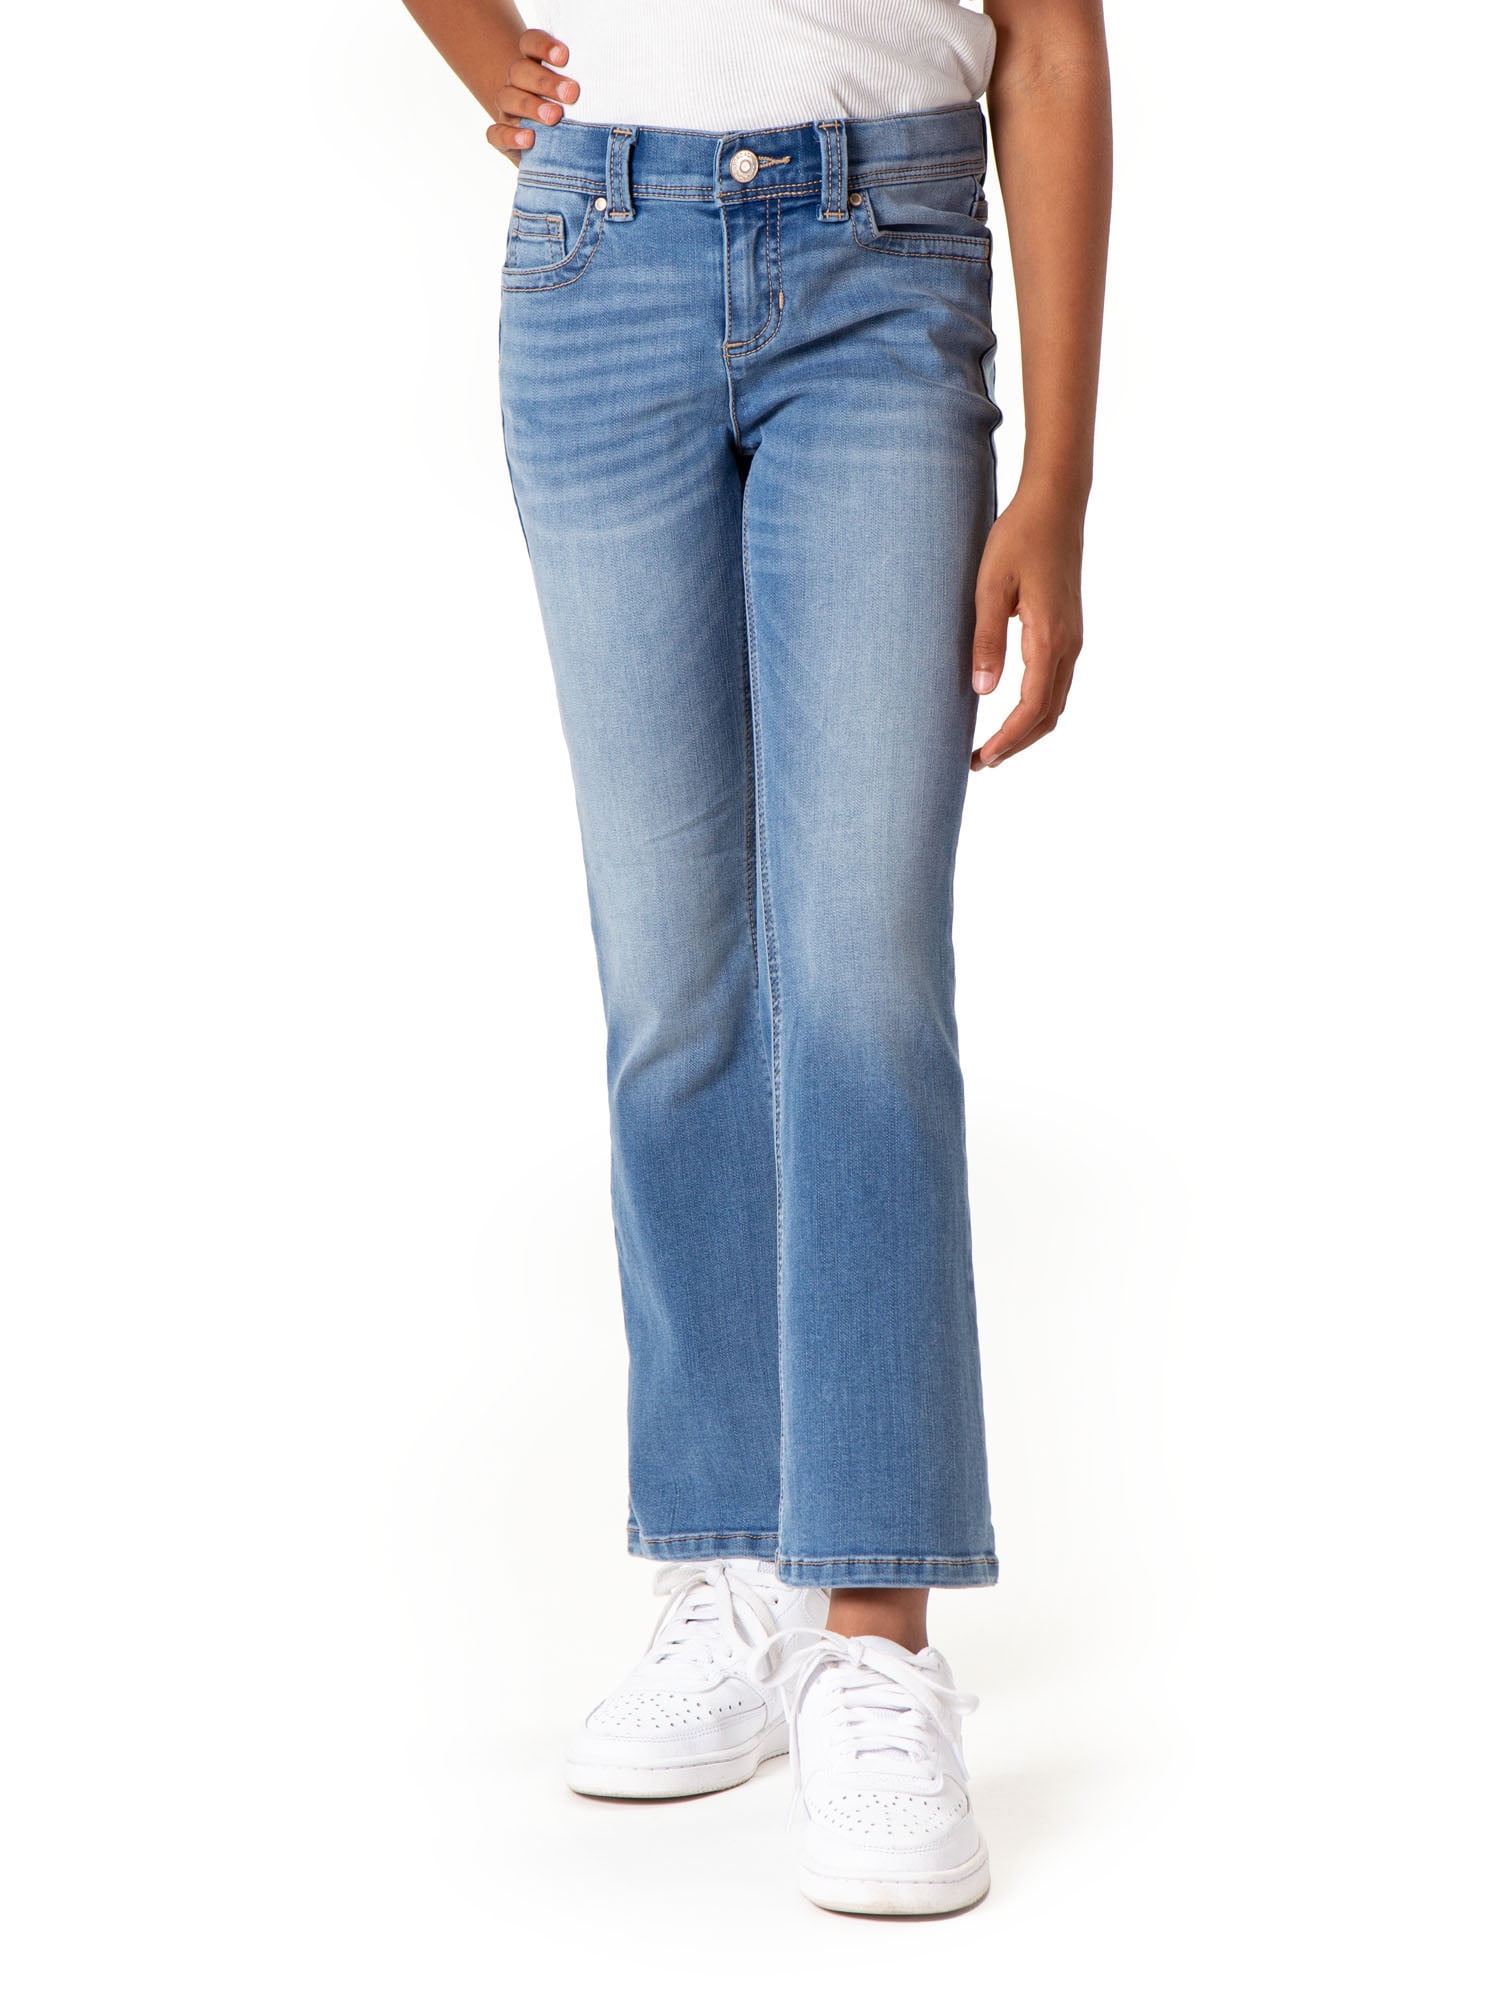 Jordache Girls Denim Jeans Black Size 14 and 41 similar items